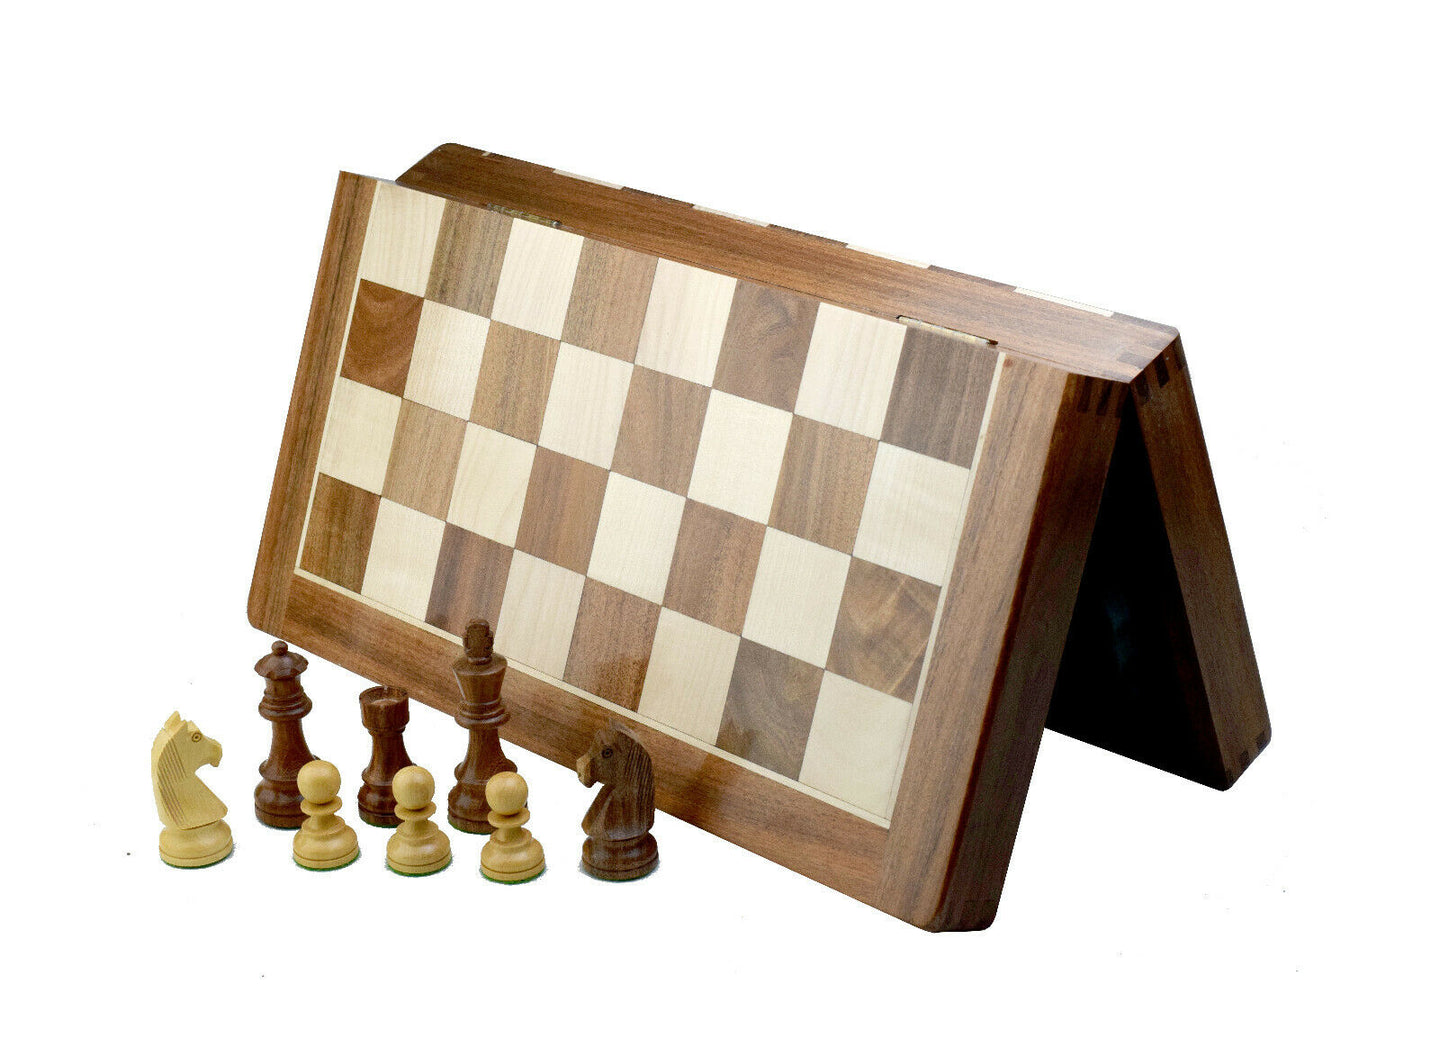 stasche中文：德国斯陶顿3.75英寸棋子套装+18英寸可折叠棋盘储物袋